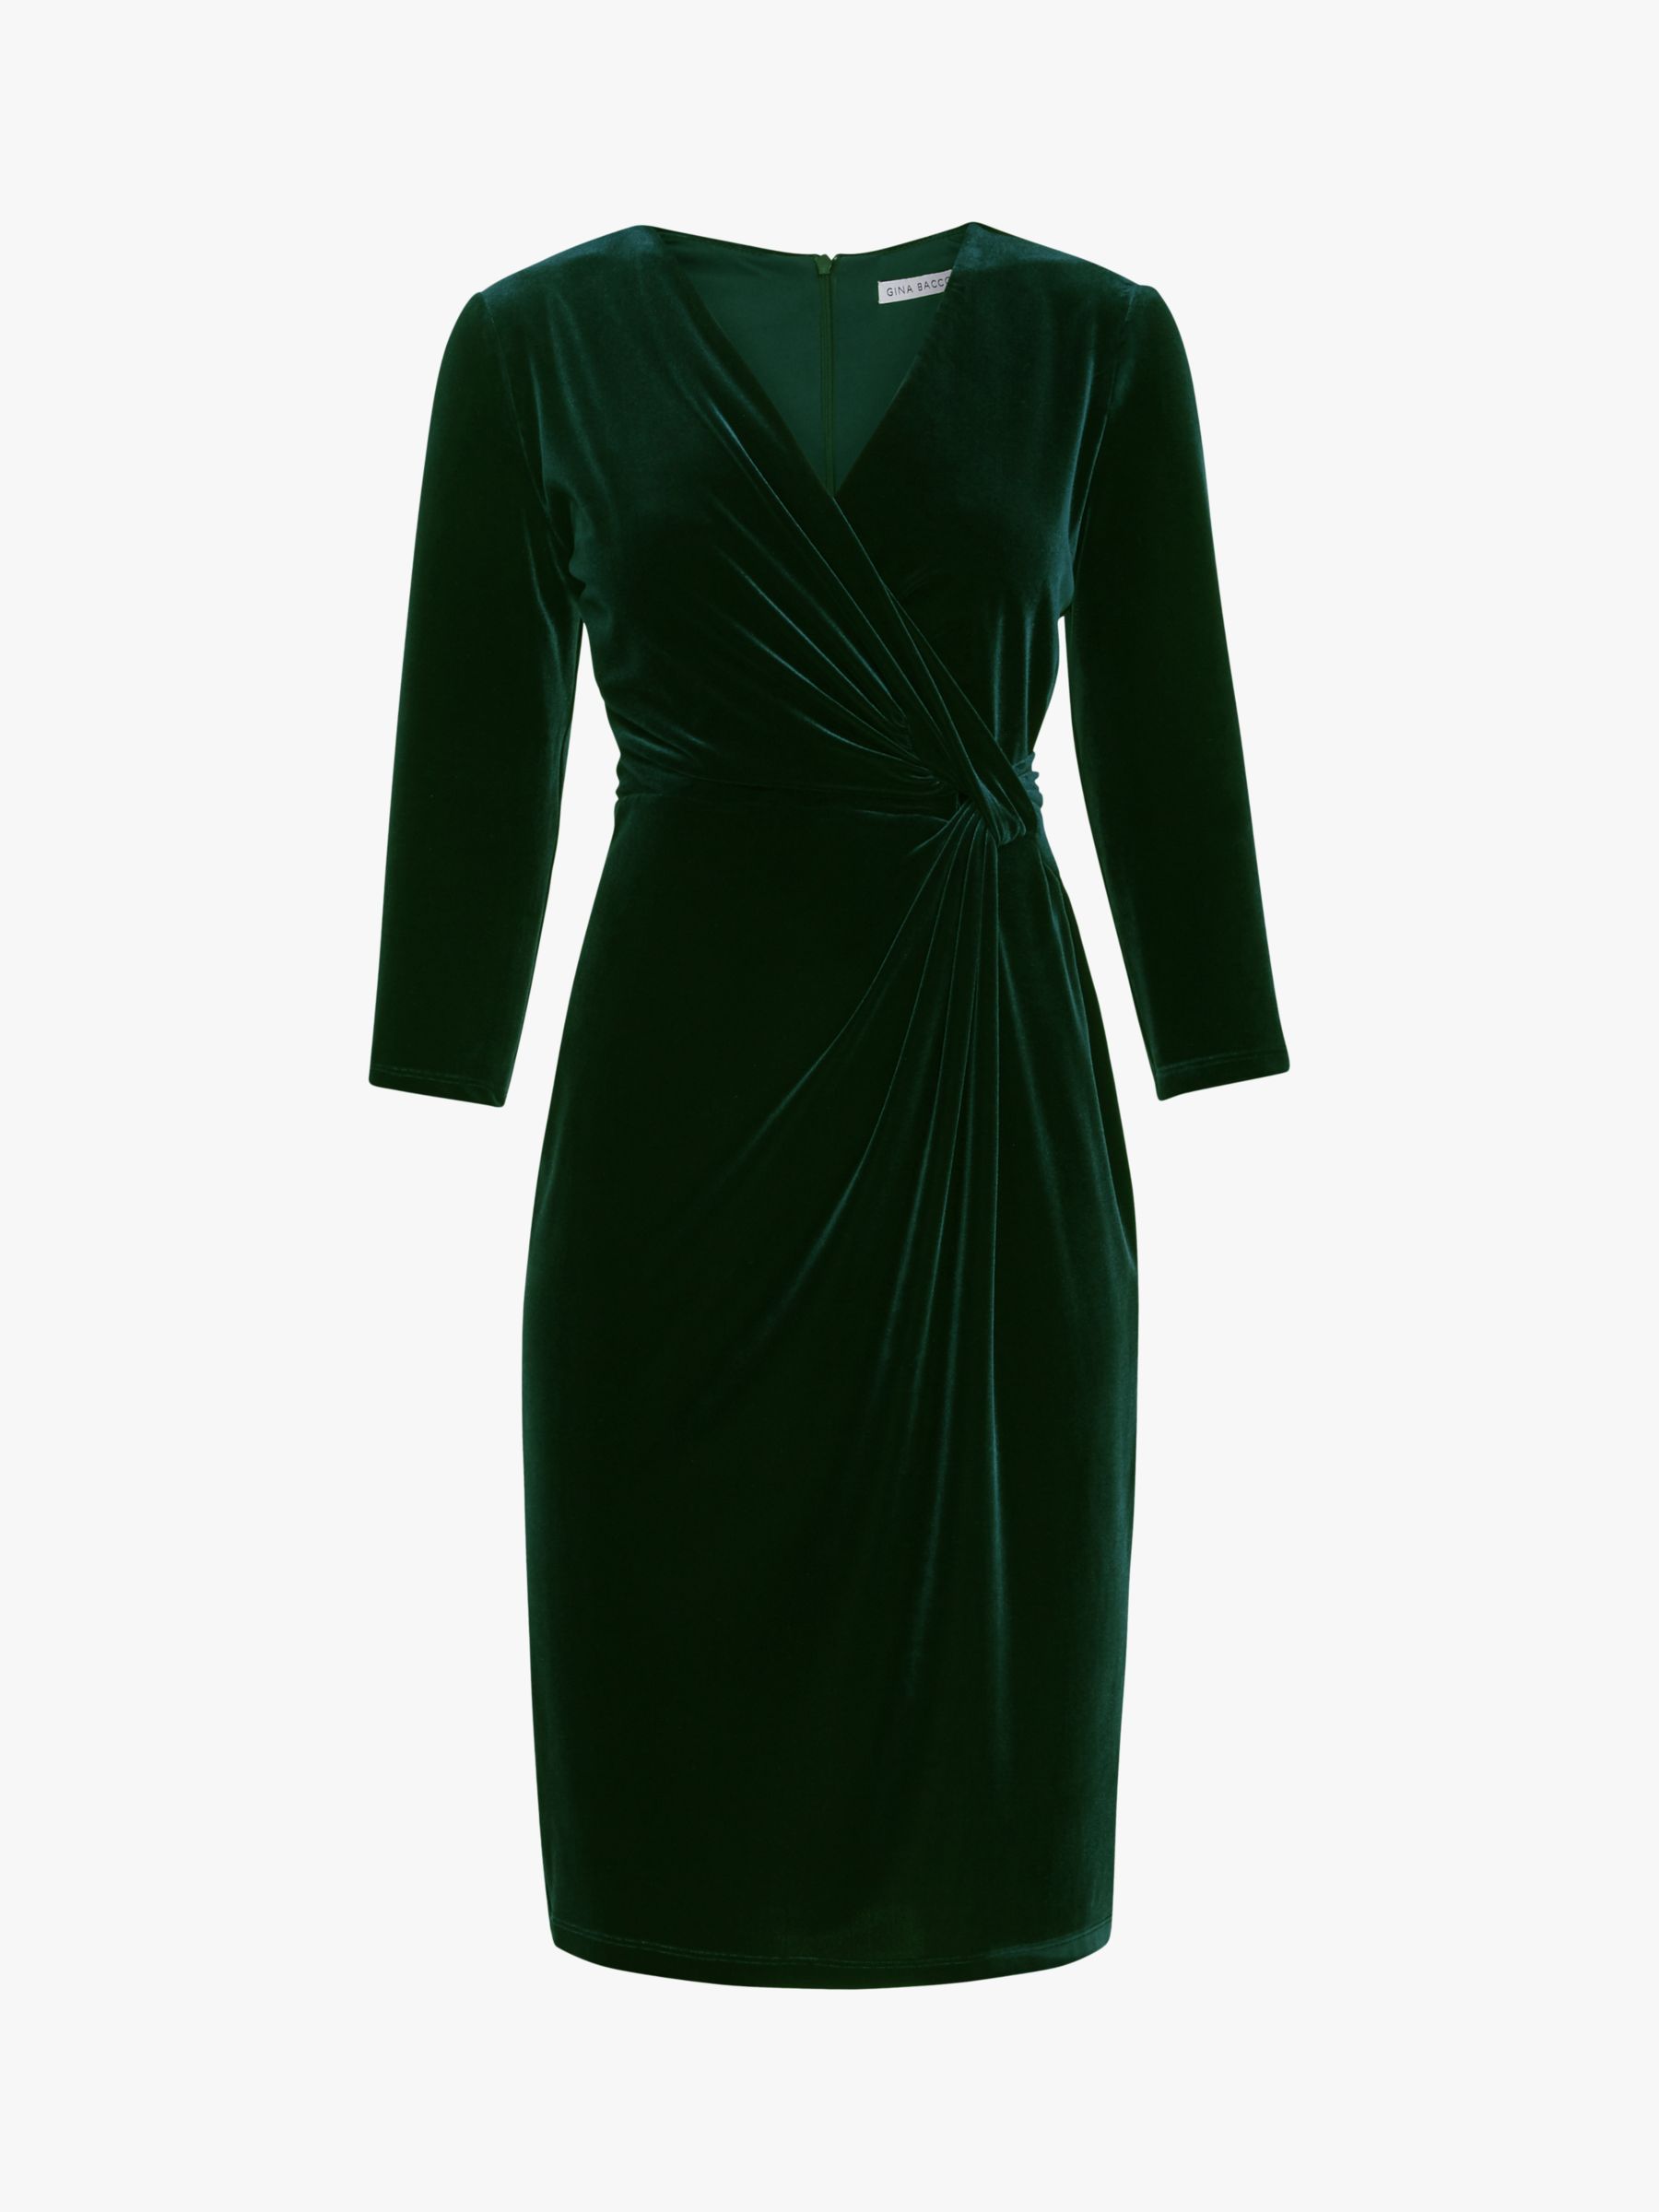 Gina Bacconi Alexxia Velvet Wrap Dress, Green at John Lewis & Partners